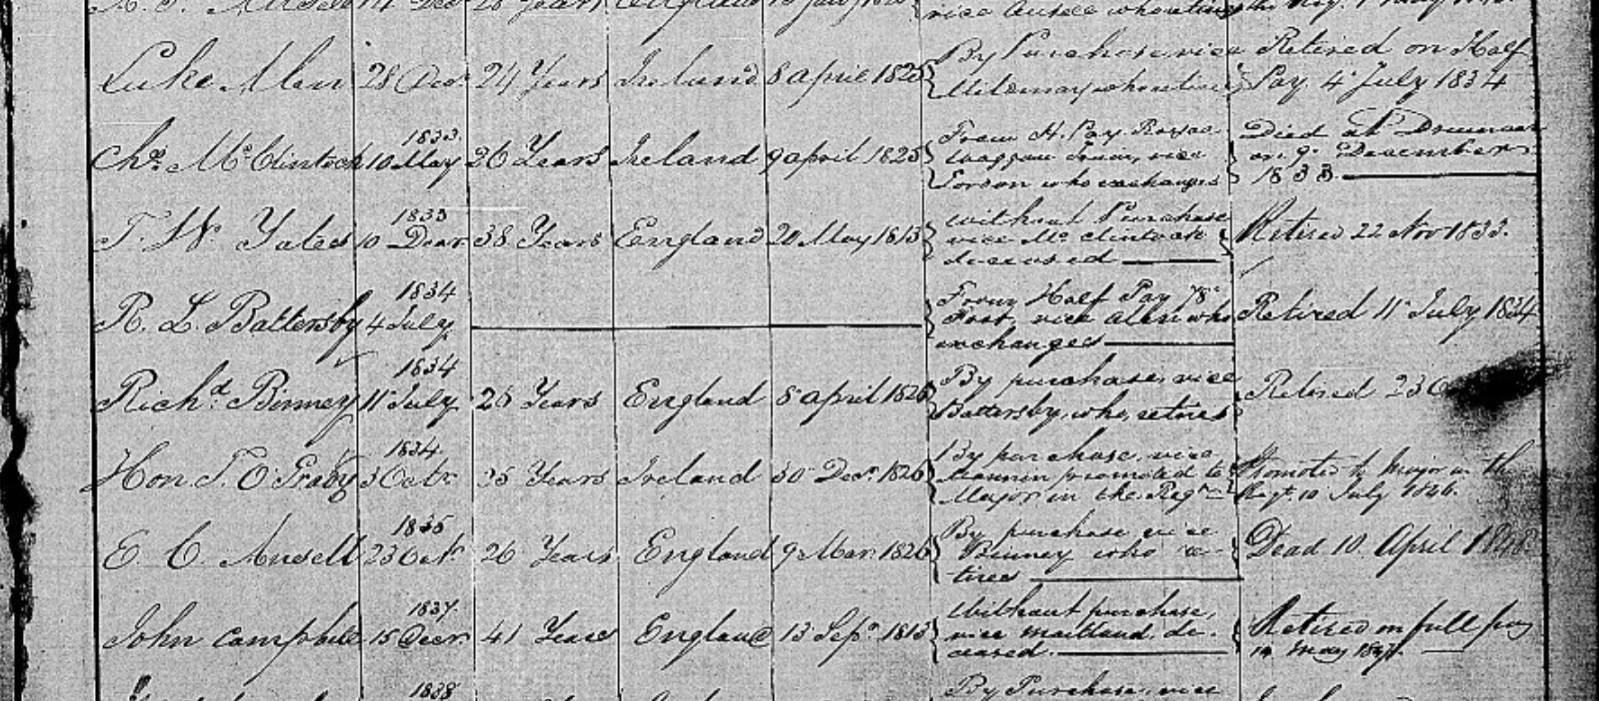 Thomas Ogrady Army Record, 1846